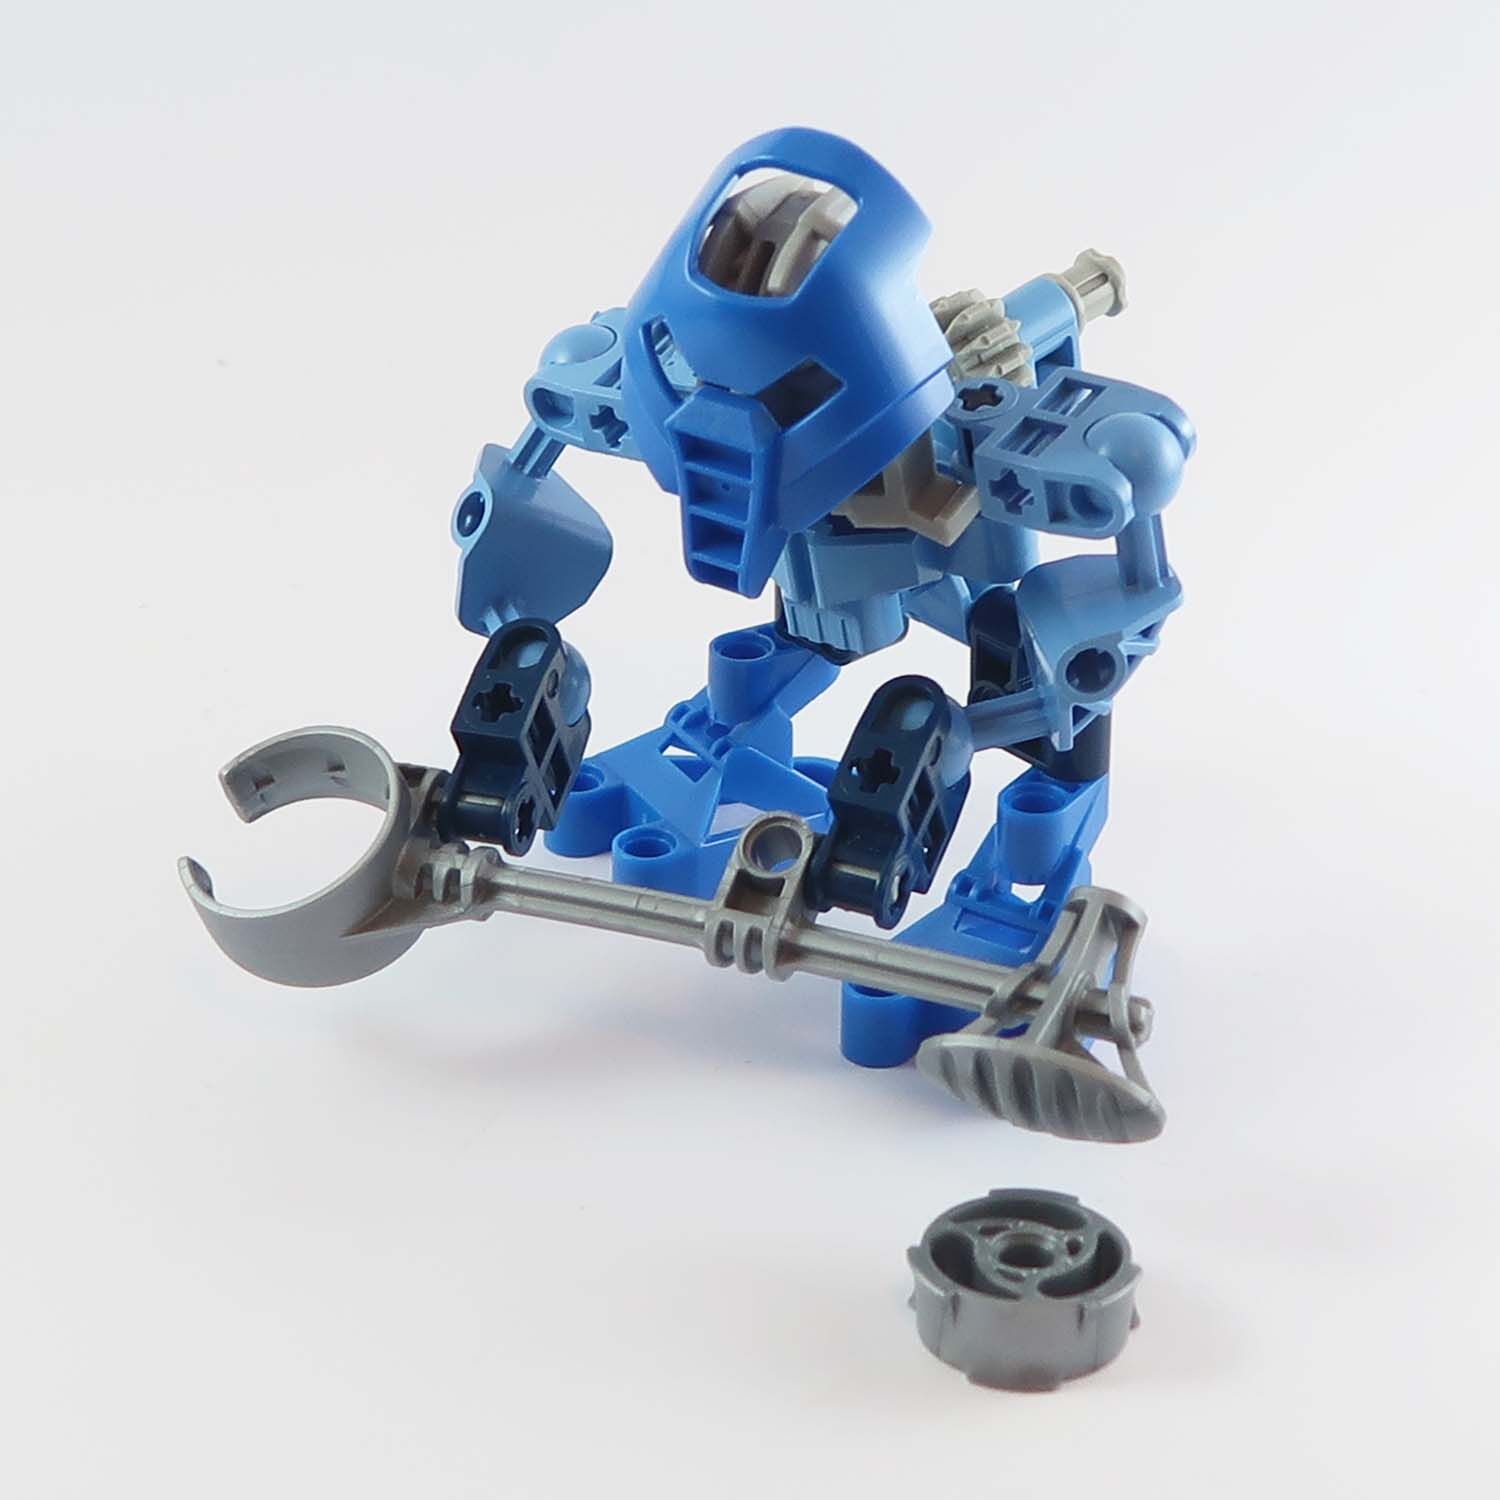 LEGO Bionicle - Matoran Macku (8586)